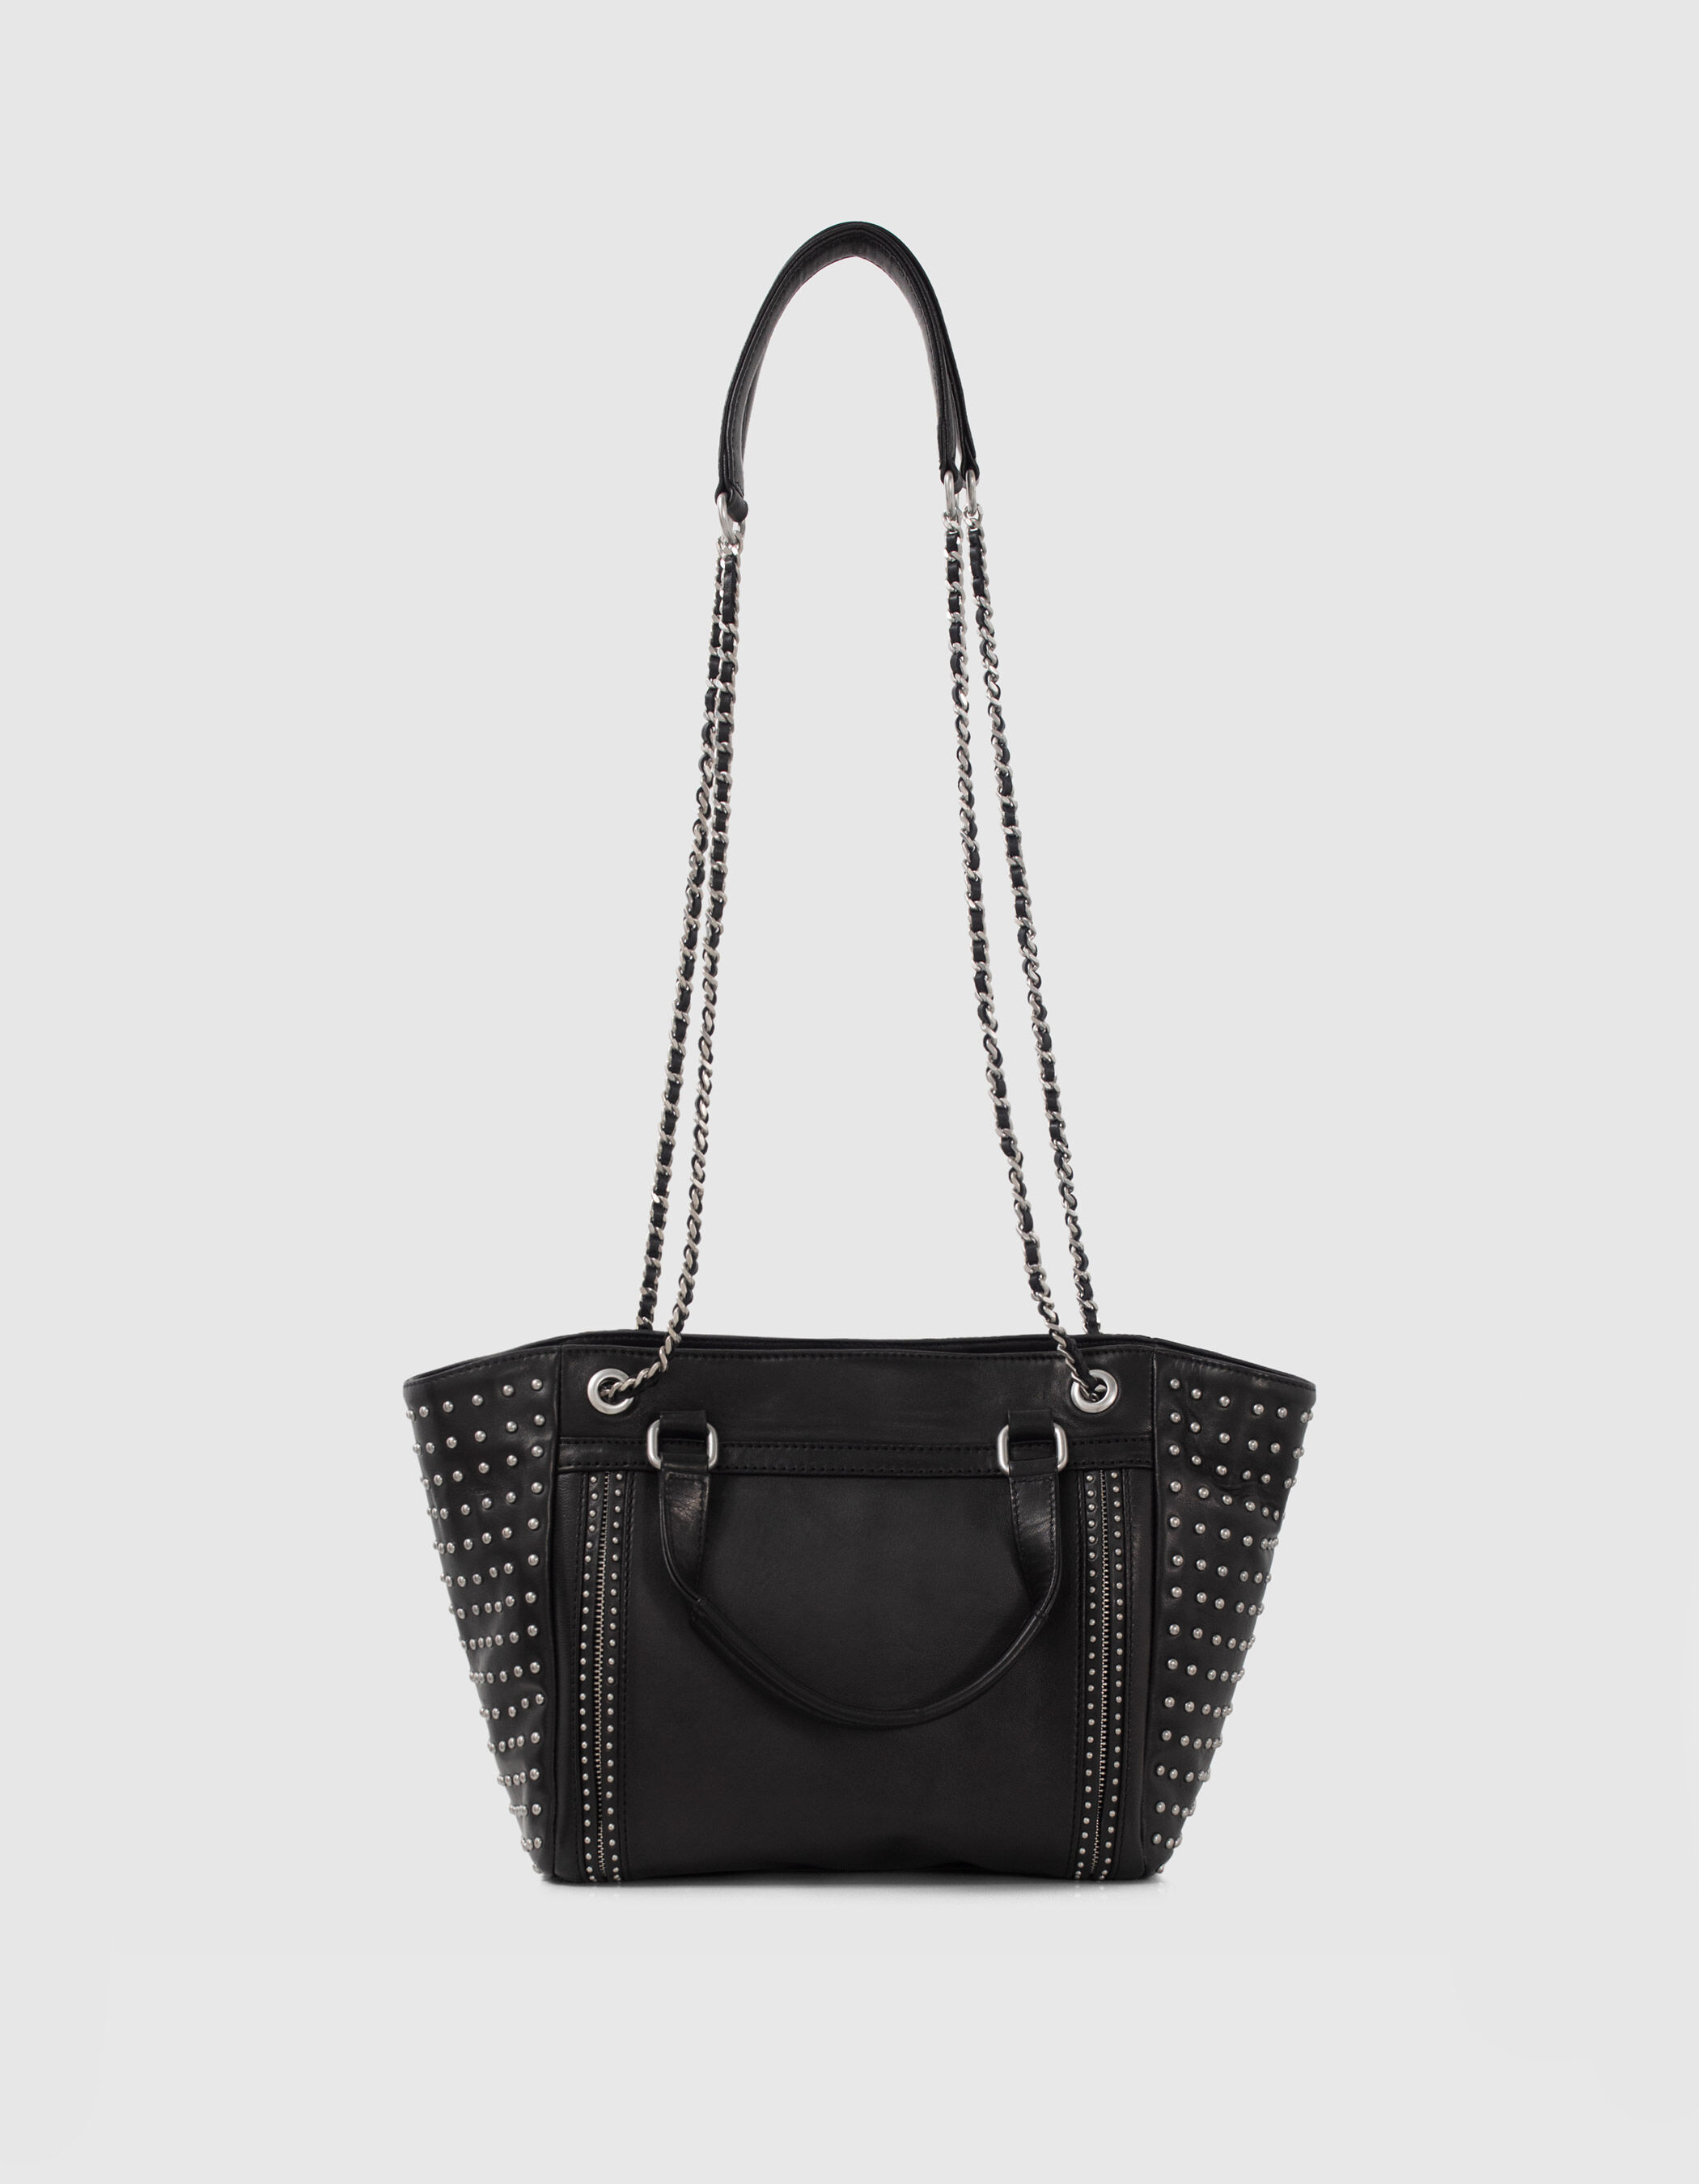 Women's black leather studded 1440 Medium tote bag